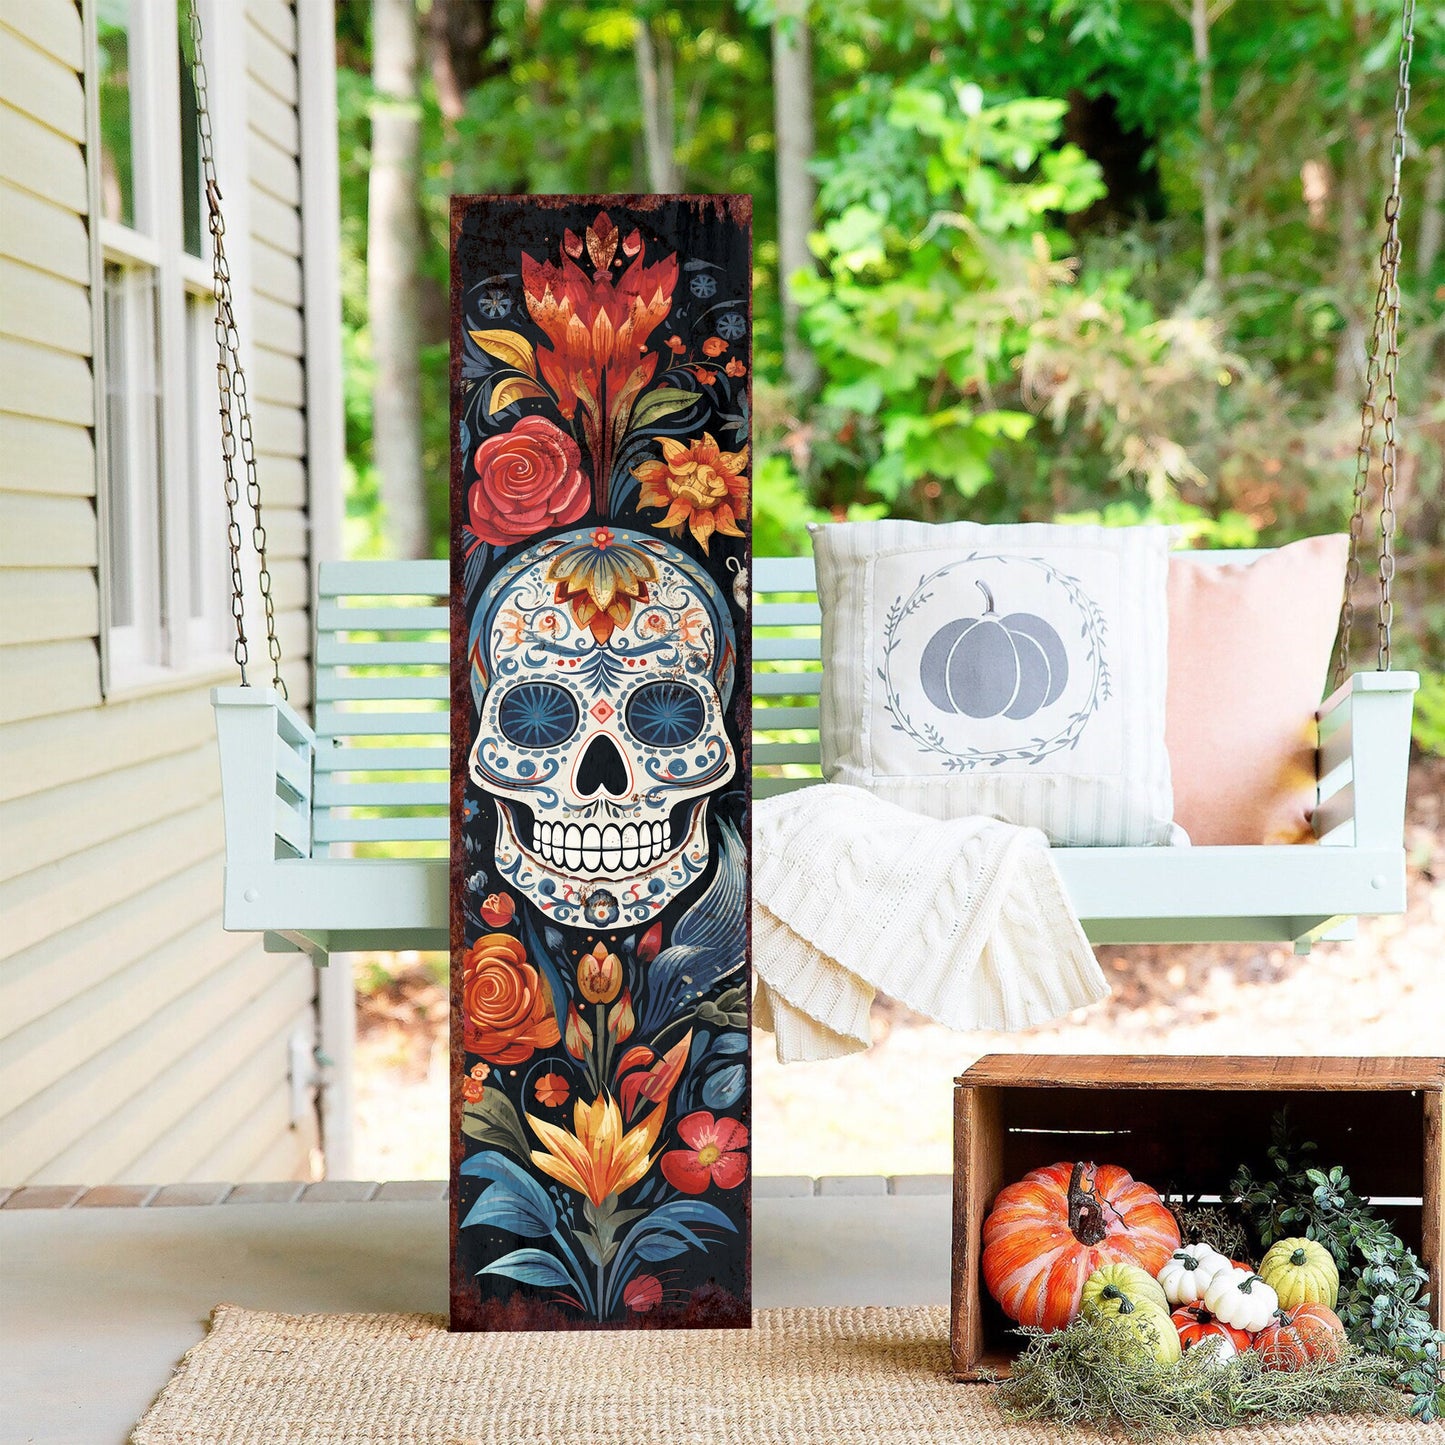 36in Dia De Los Muertos Sugar Skull Porch Sign - Day of the Dead Decor Ideal for Entryway, Mantle, Living Room, Kitchen, Porch Decor